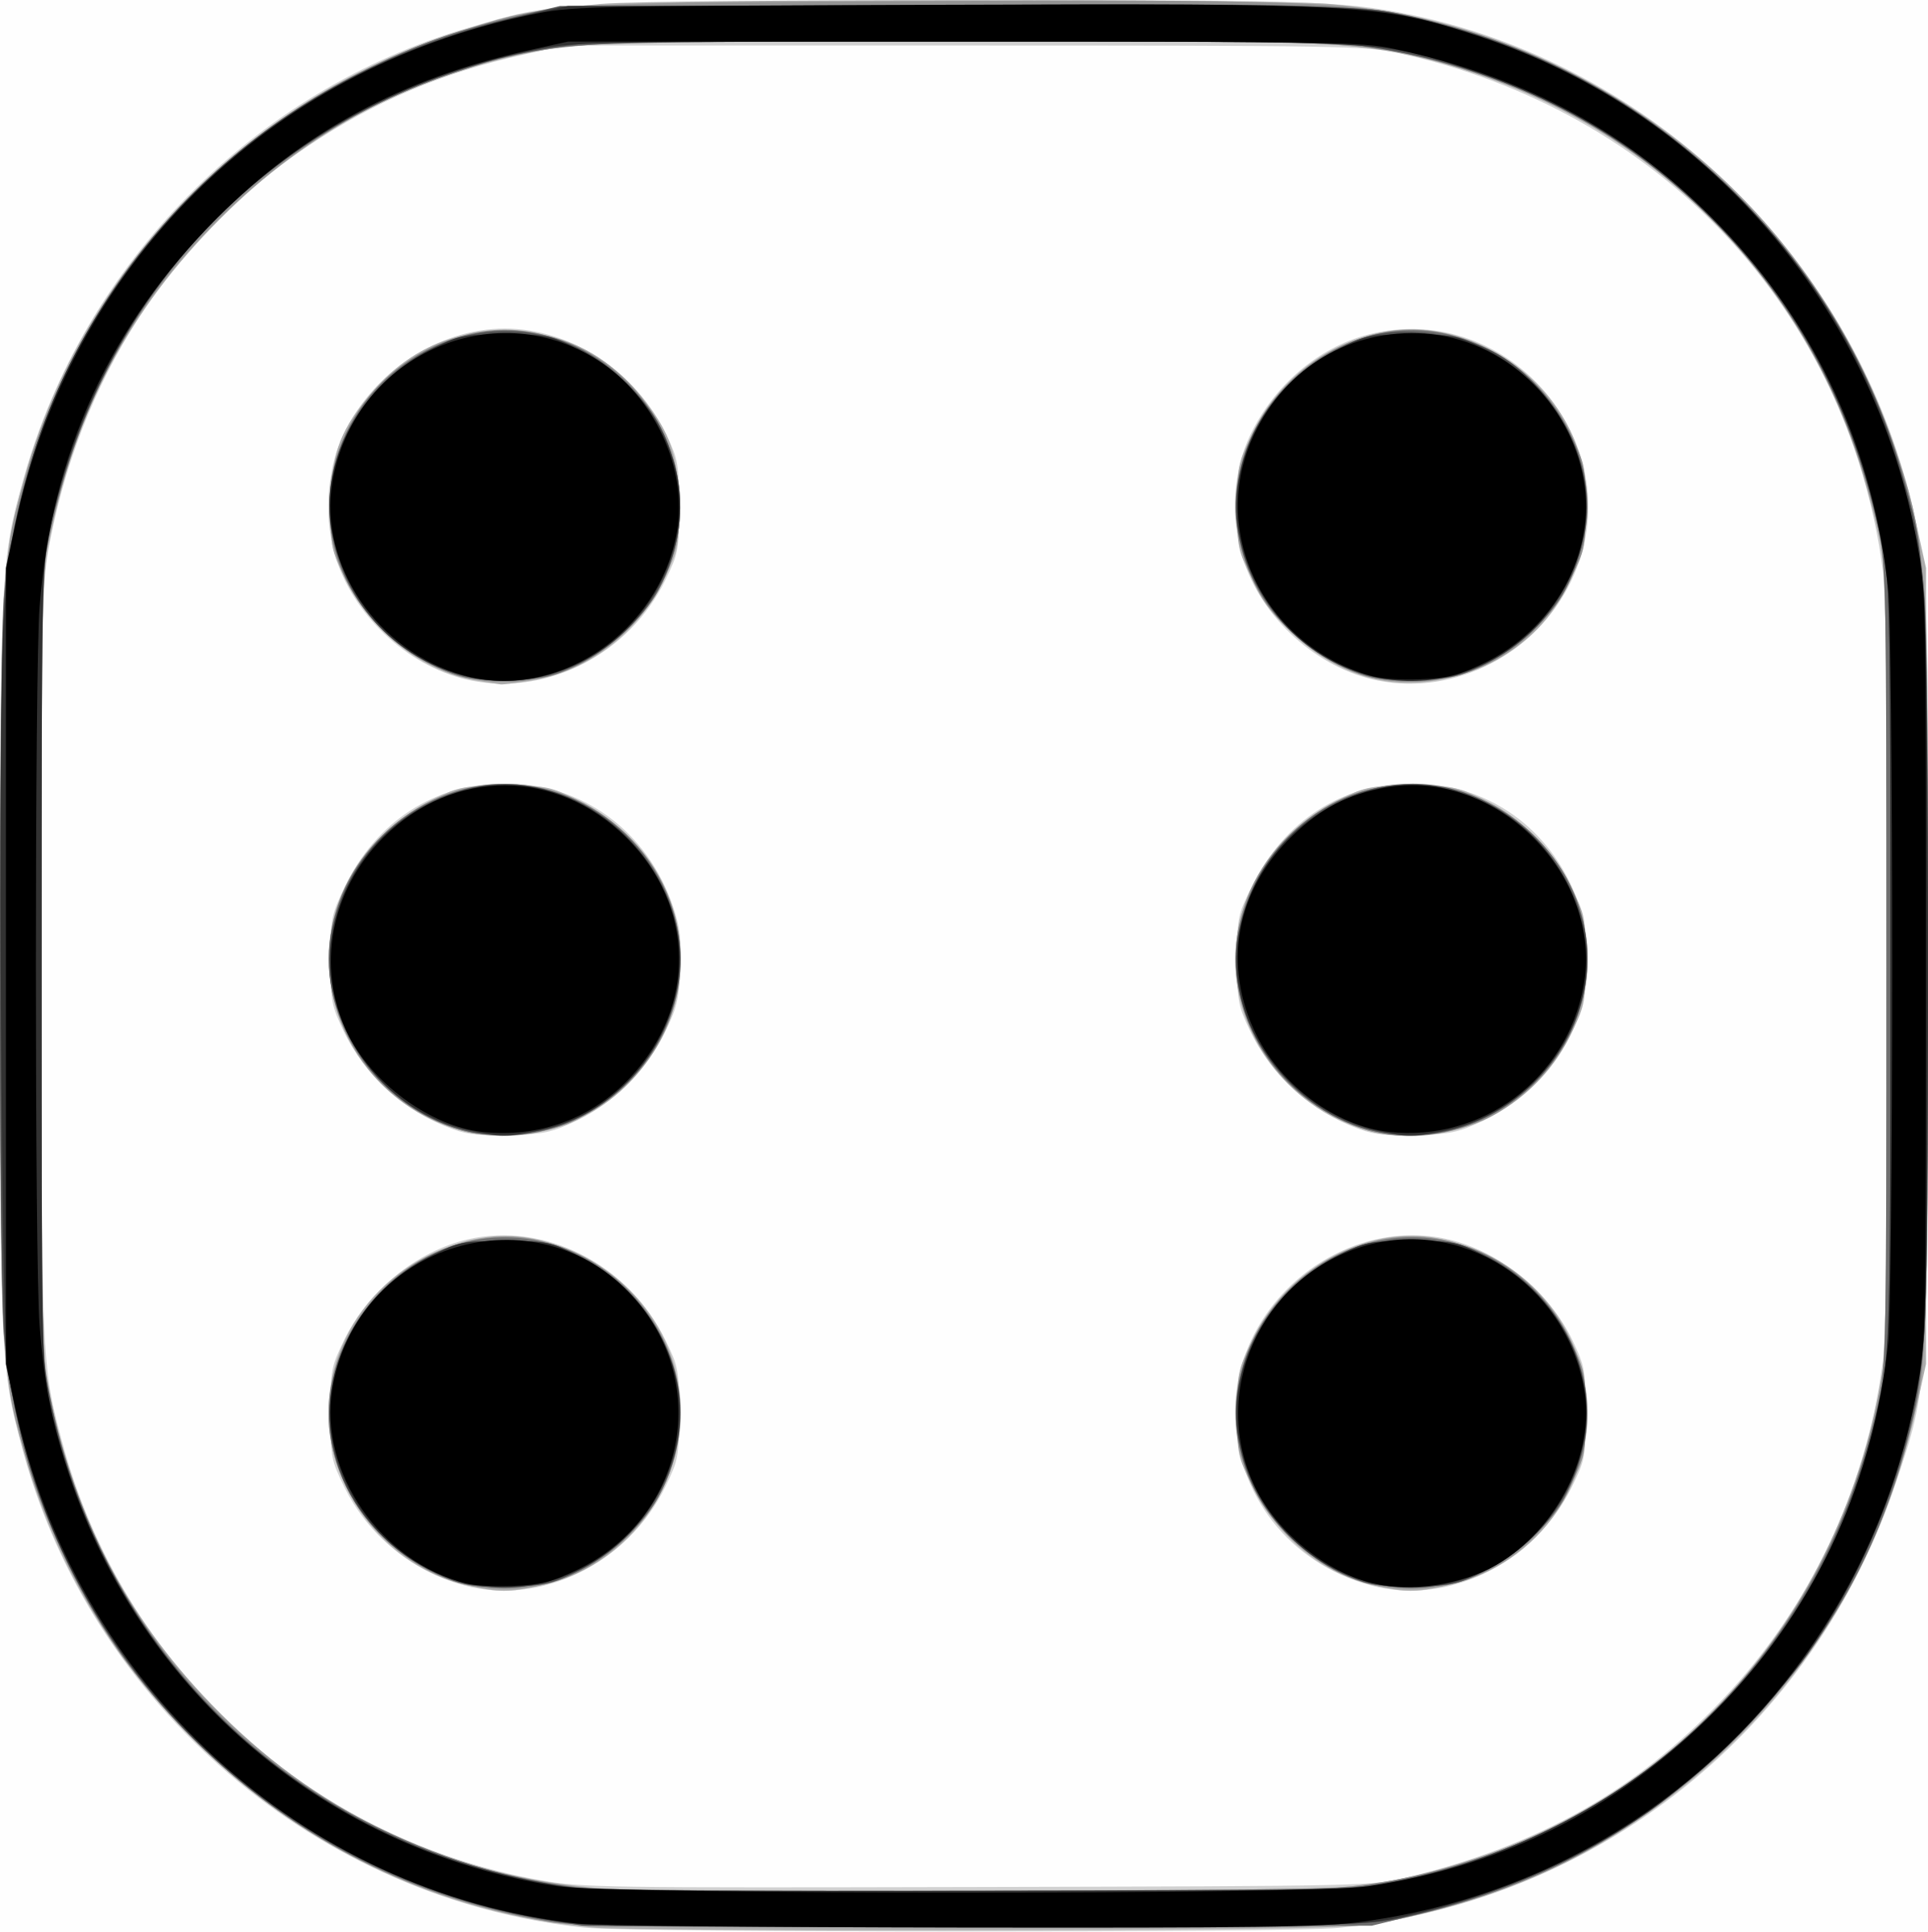 Six dice clipart